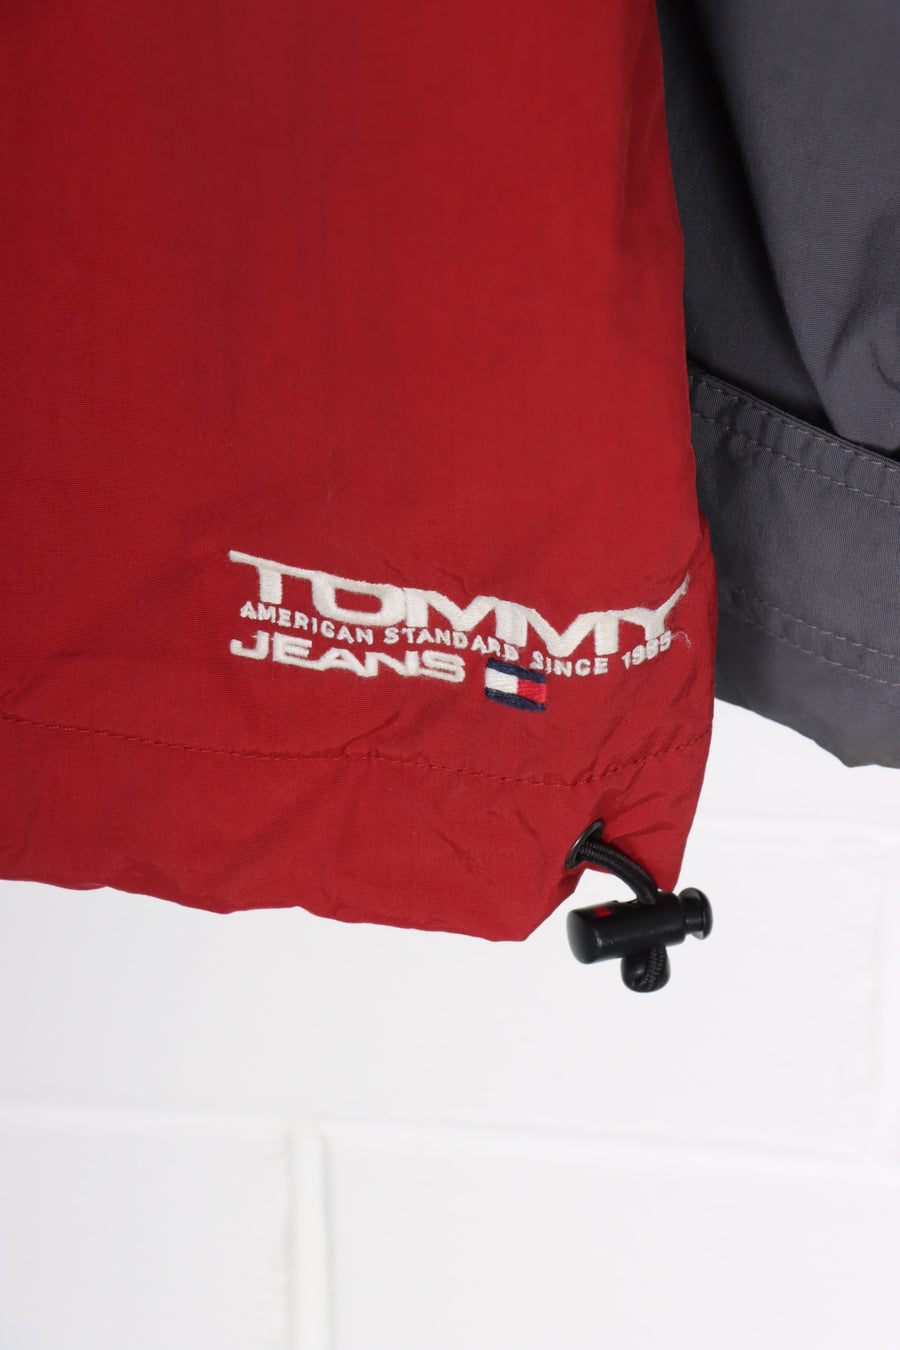 TOMMY HILFIGER Grey & Red Striped Fleece Lined Hooded Jacket (XXXL)